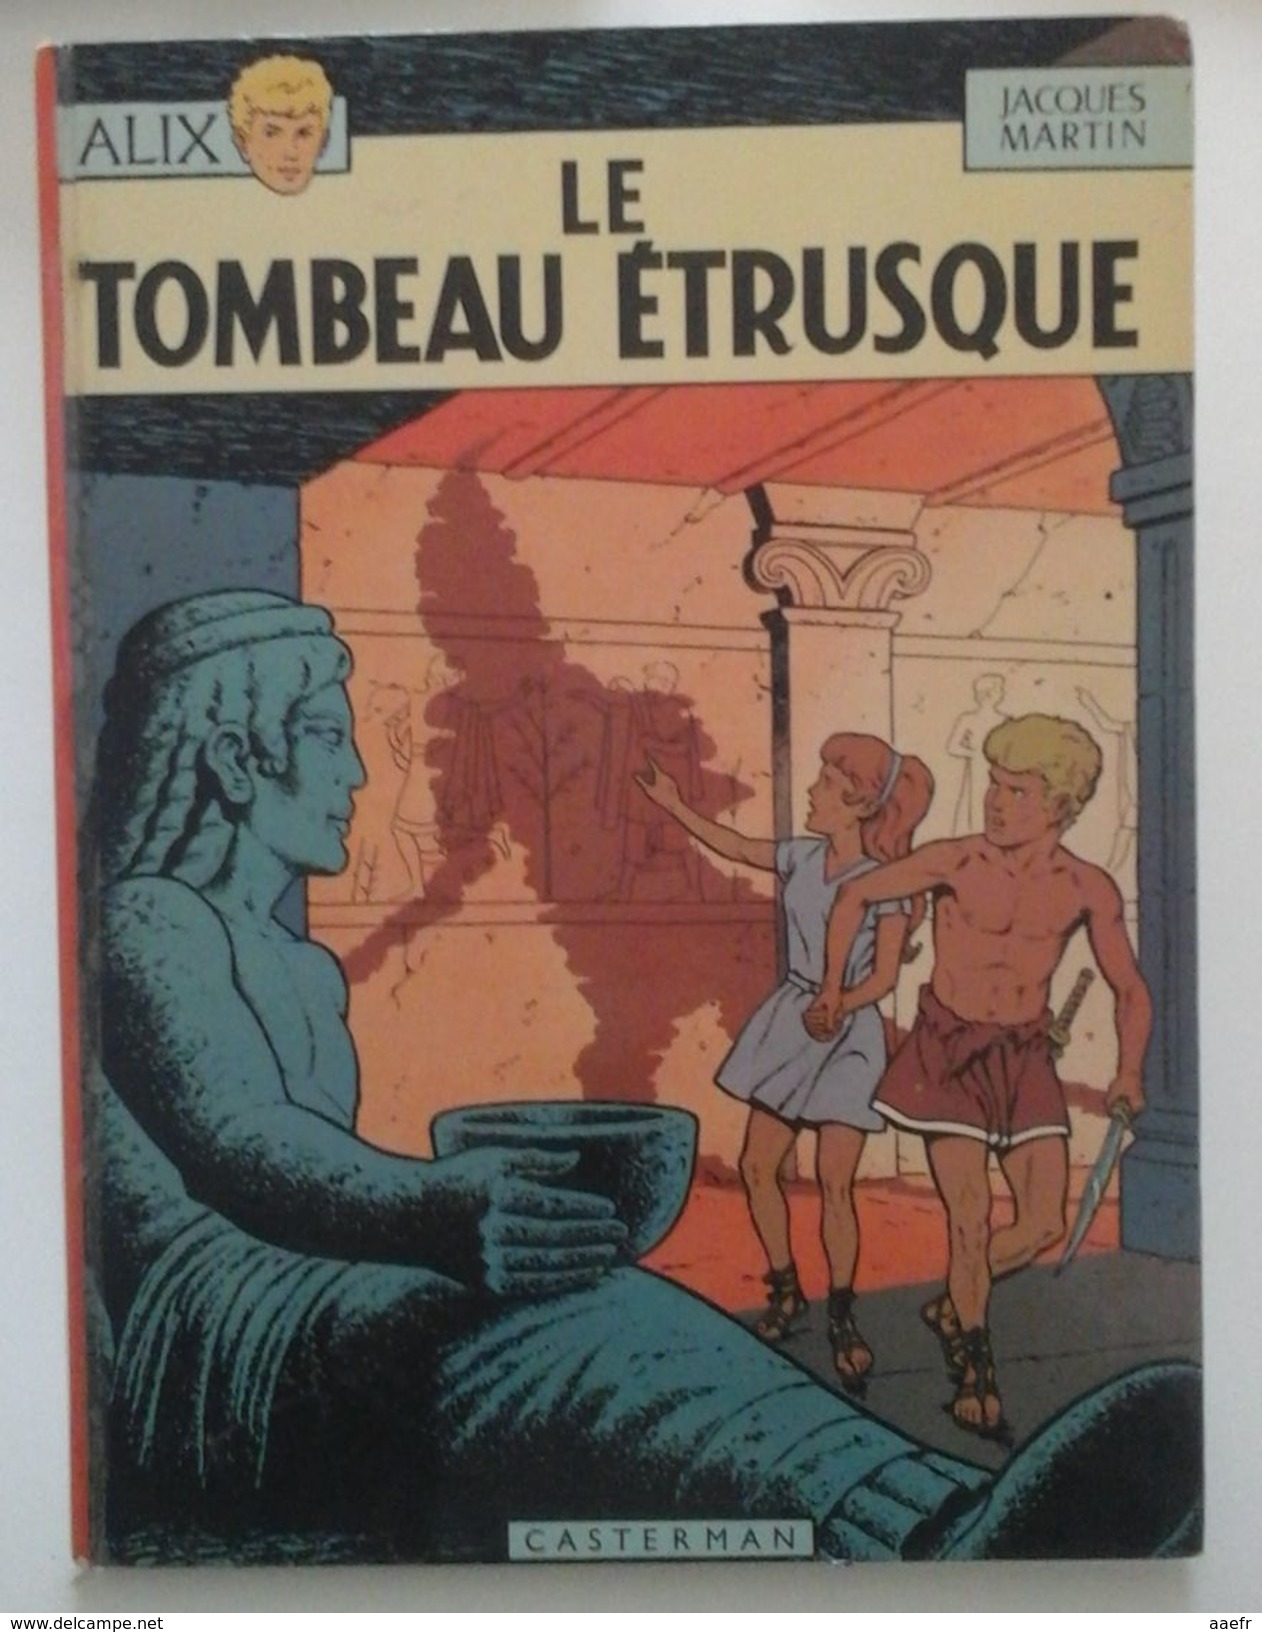 Alix - Le Tombeau étrusque - J. Martin - Casterman 1974 - Réf. 8b74 - Alix